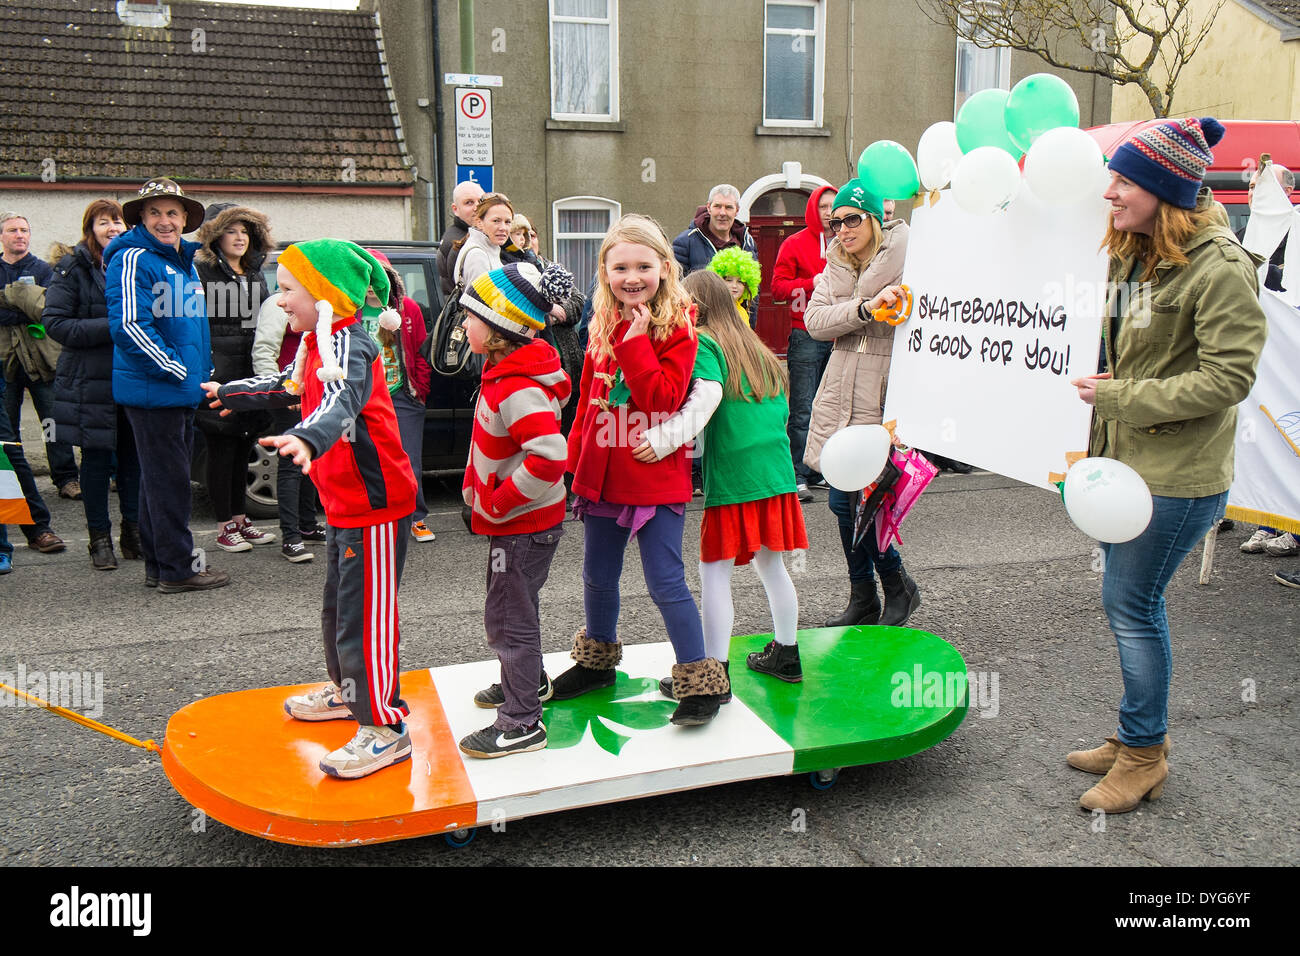 St Saint Patricks Day parade - kids on a giant skateboard - Village of Skerries, Dublin, Ireland Stock Photo